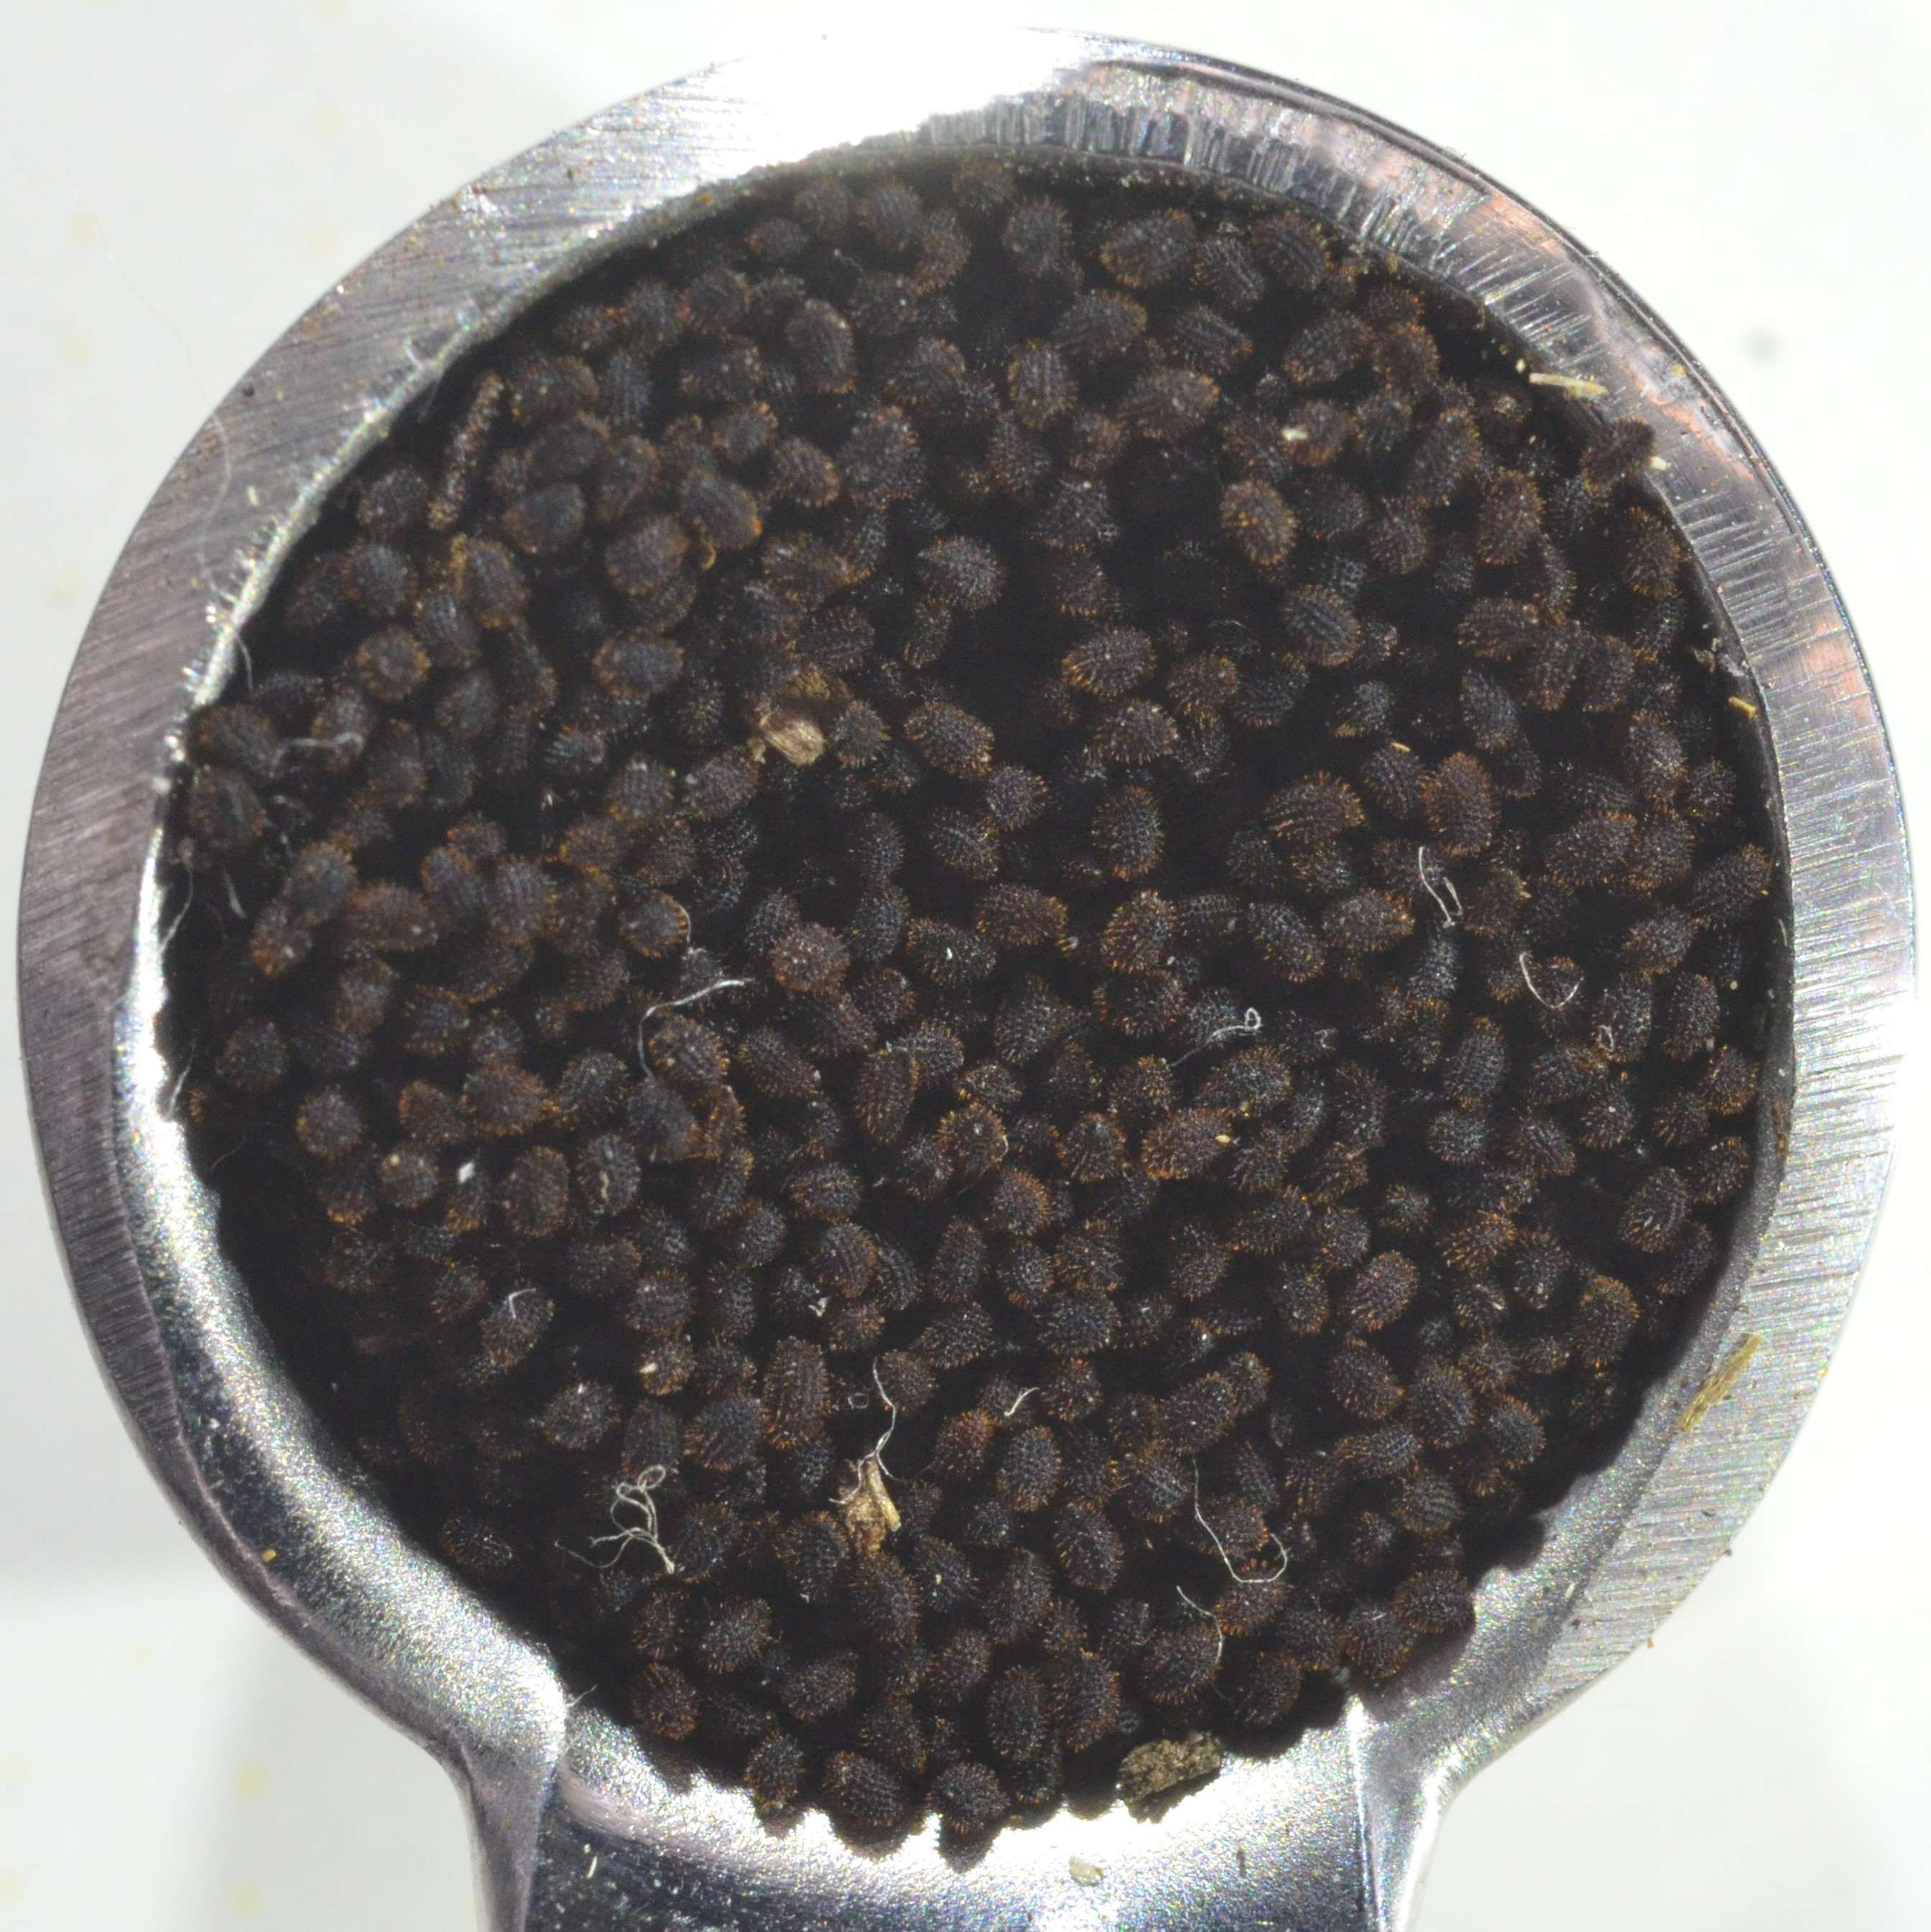 Heuchera cylindrica seeds in a 1/4 tsp (2 cm diameter).